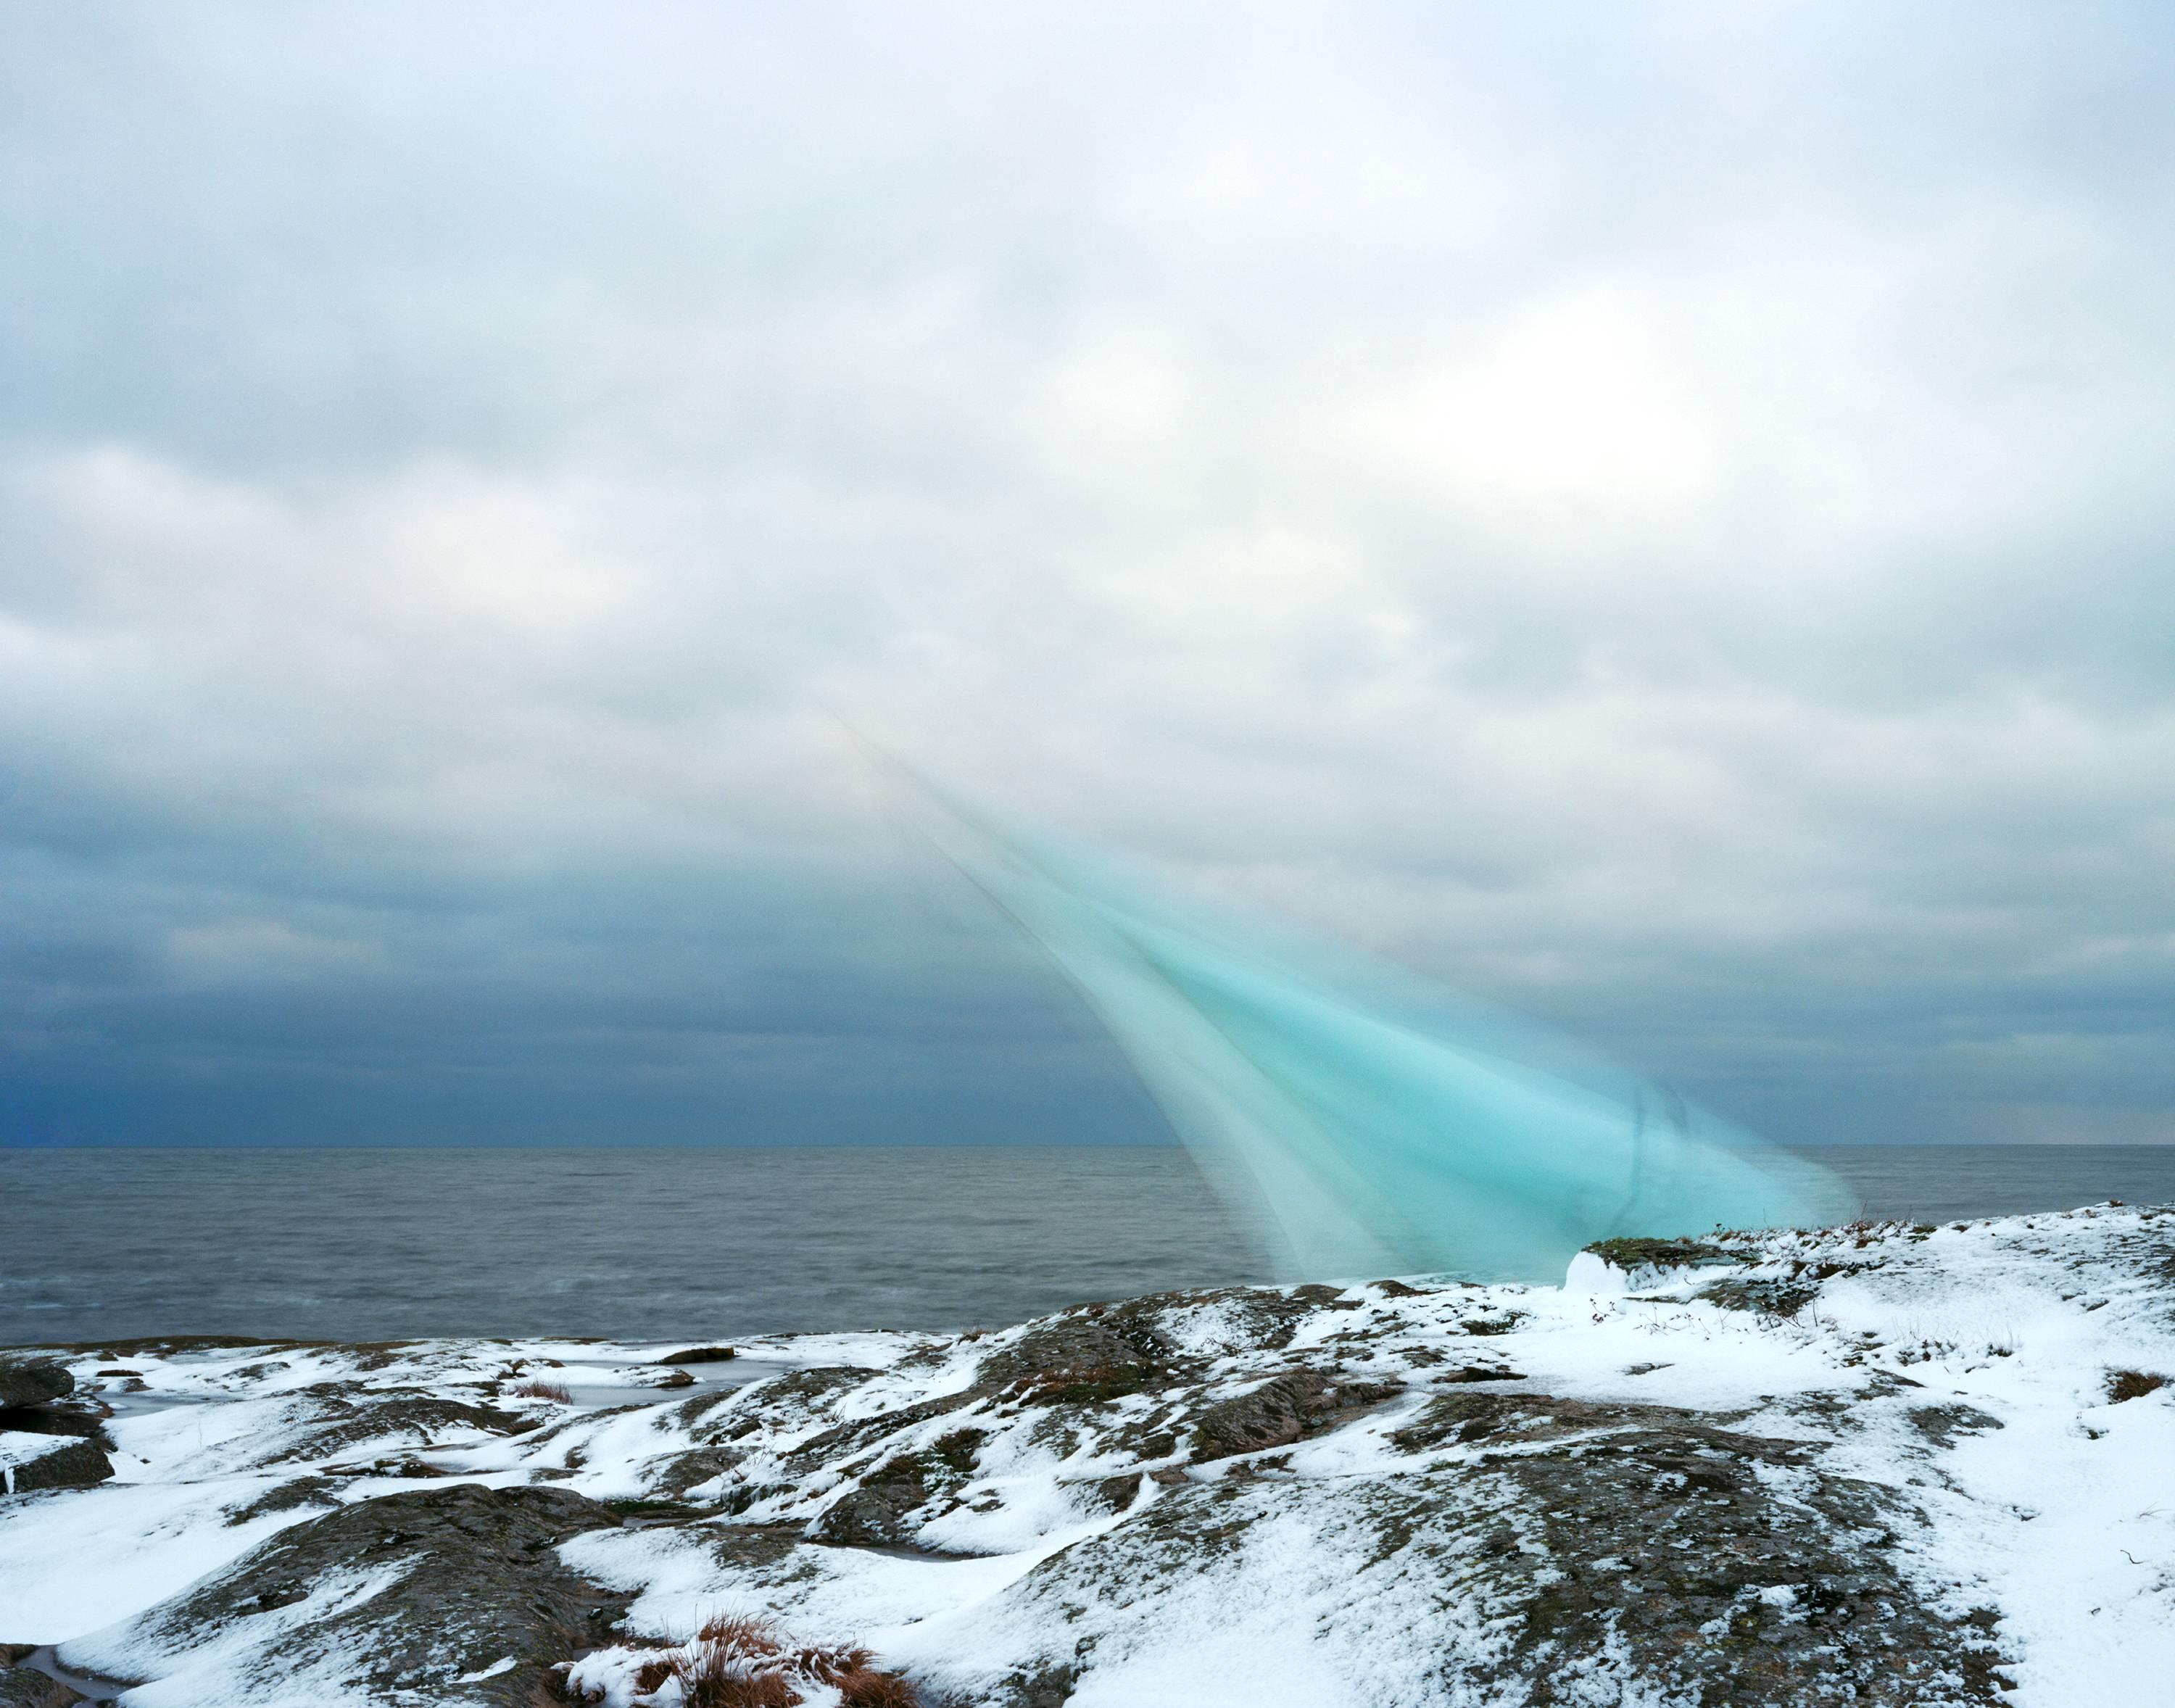 Ole Brodersen Landscape Photograph - String, Cloth, and Kite 04 - large sky blue snow Scandinavian landscape photo